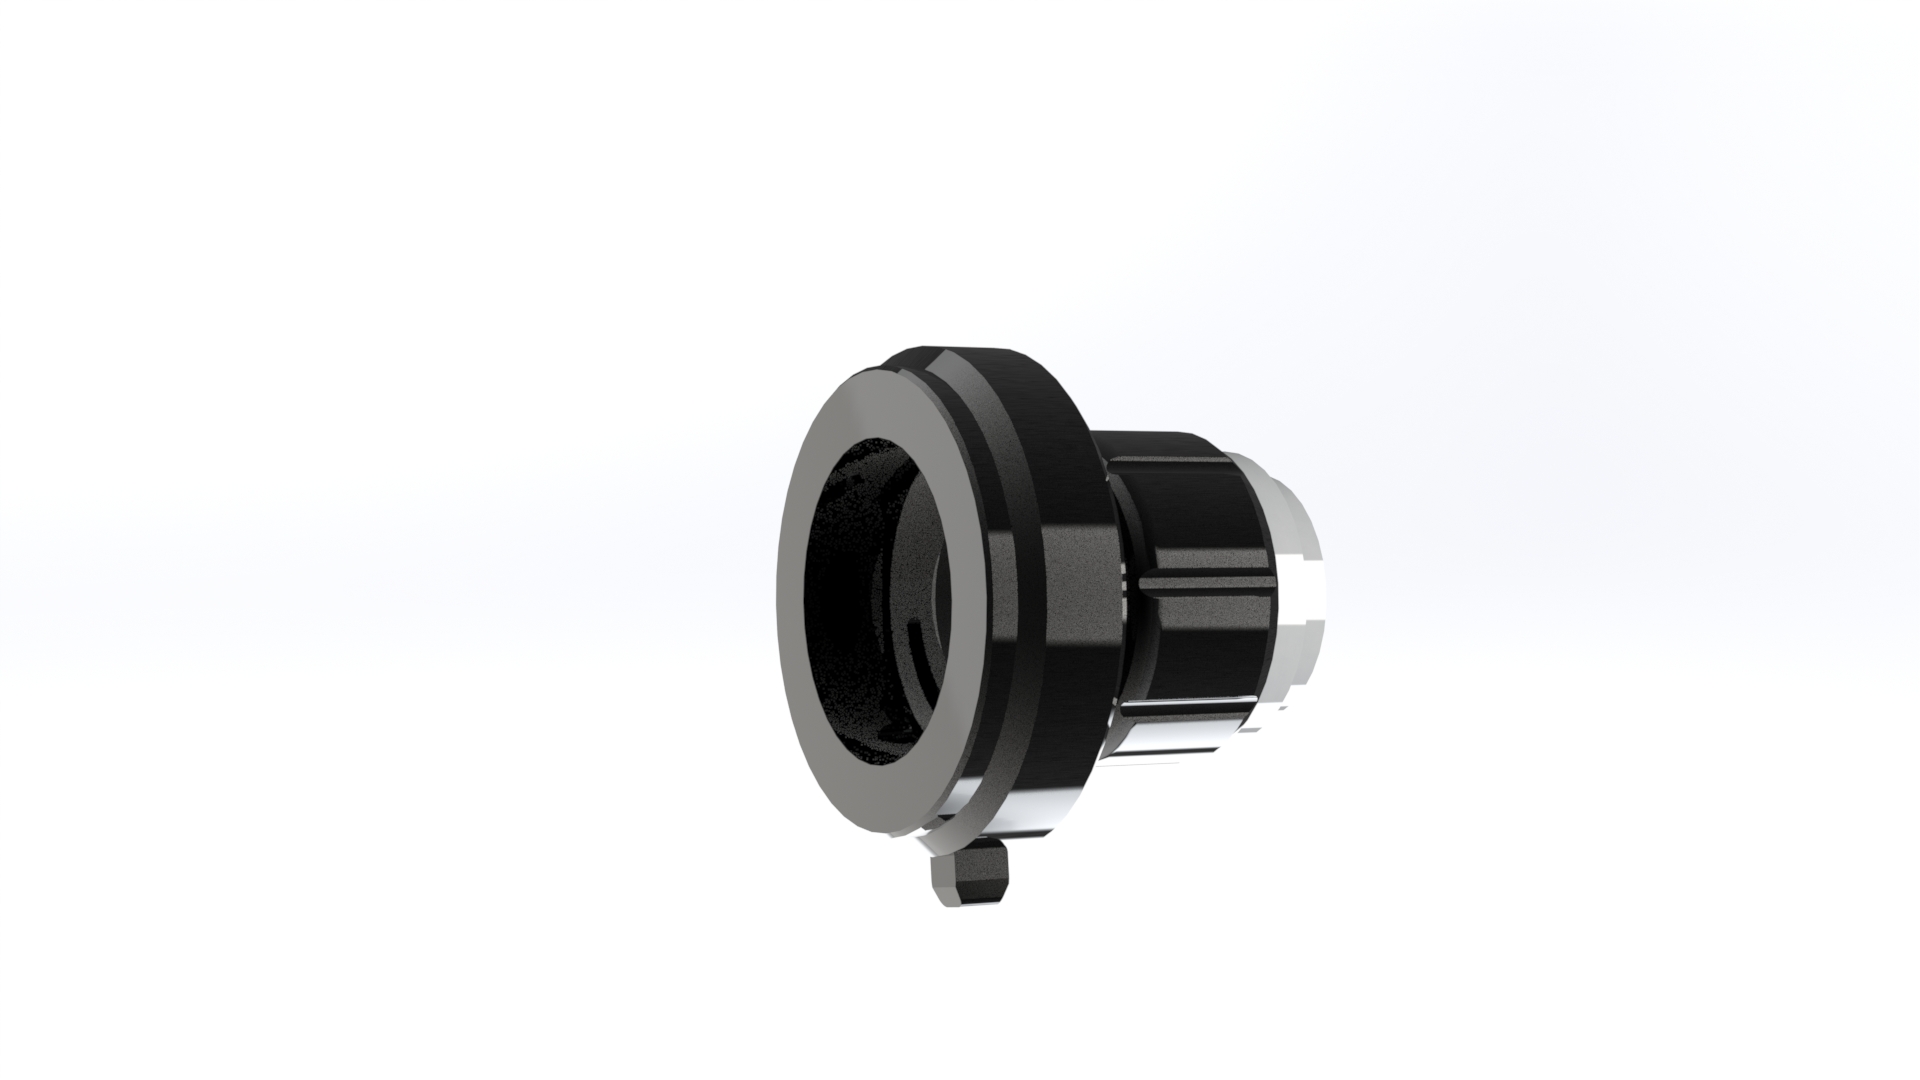 Endoscope Camera Adapter